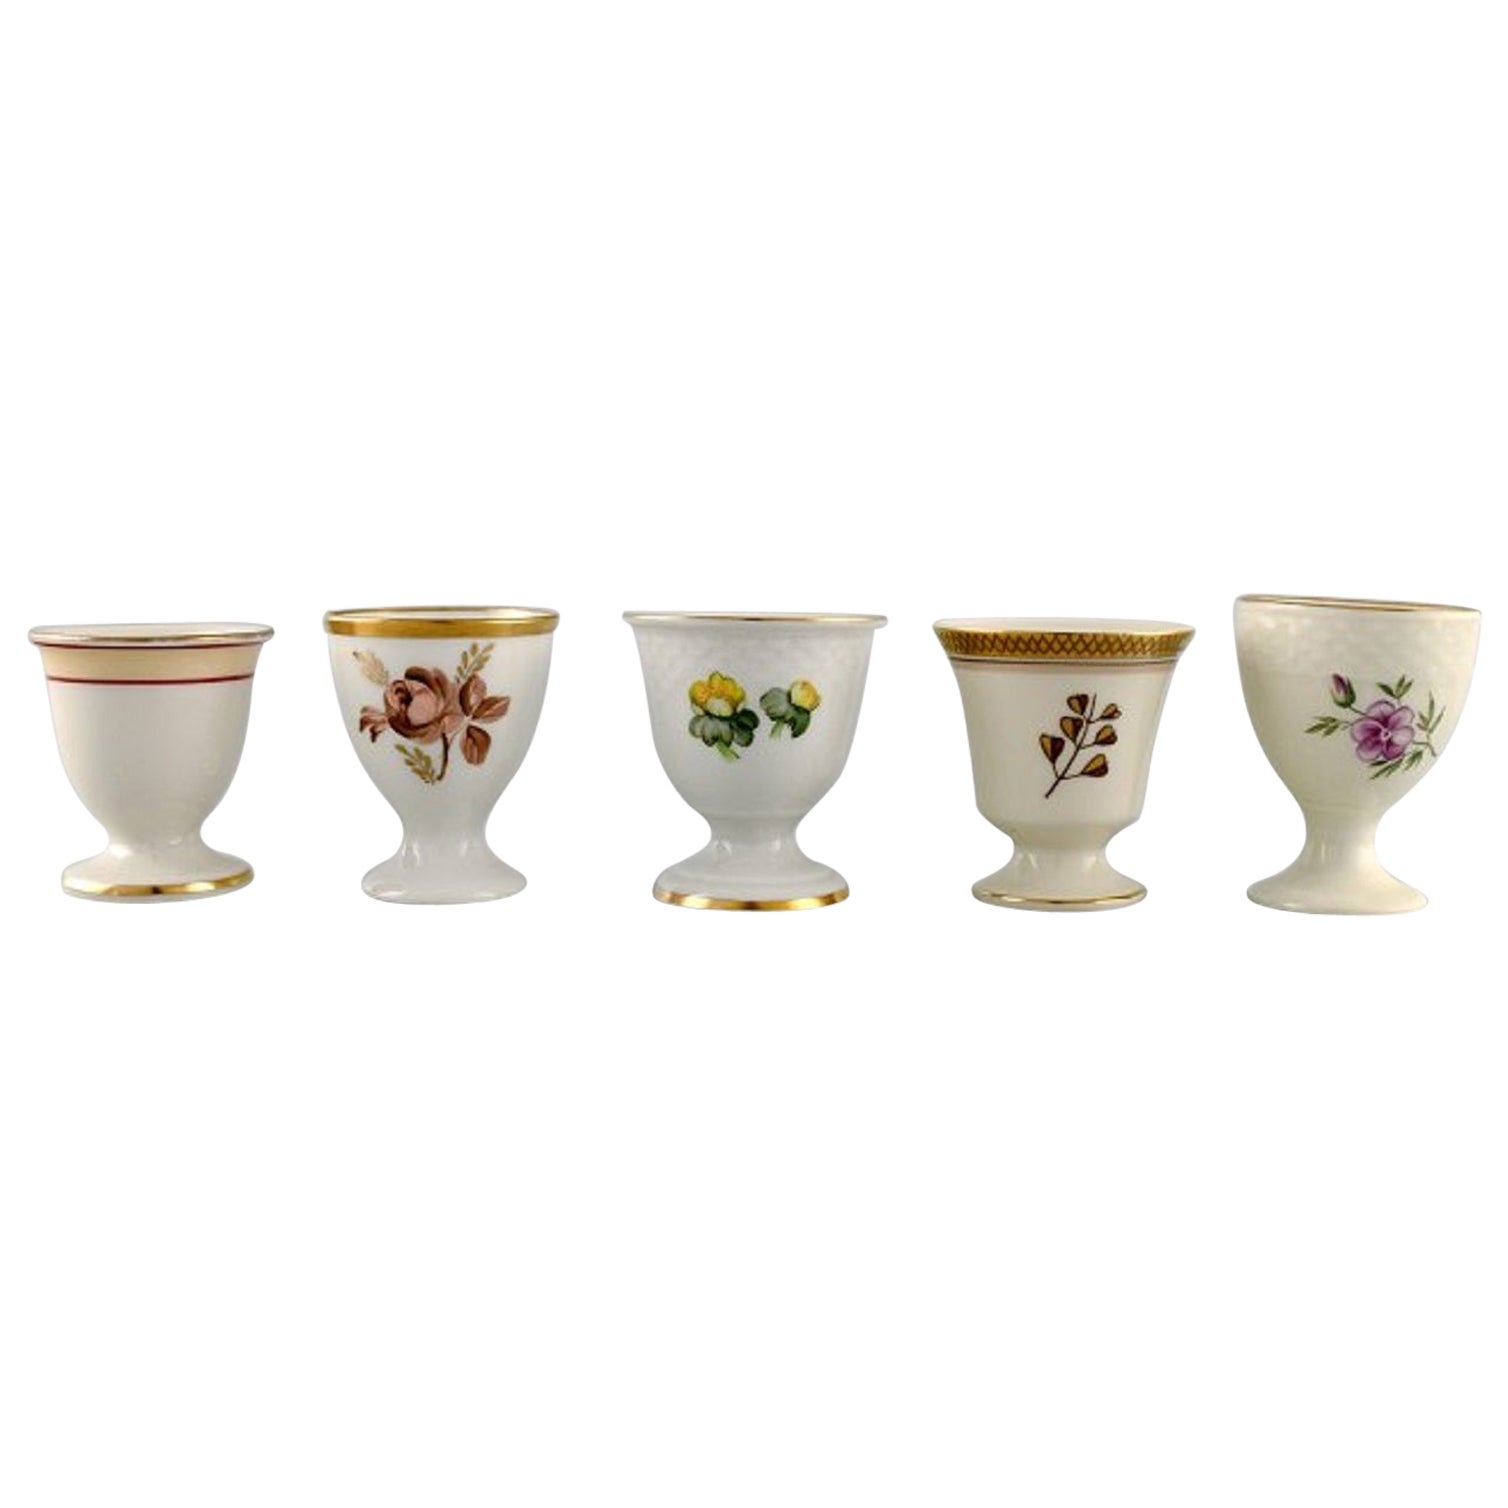 Royal Copenhagen and Bing & Grøndahl. Five egg cups in hand-painted porcelain. For Sale